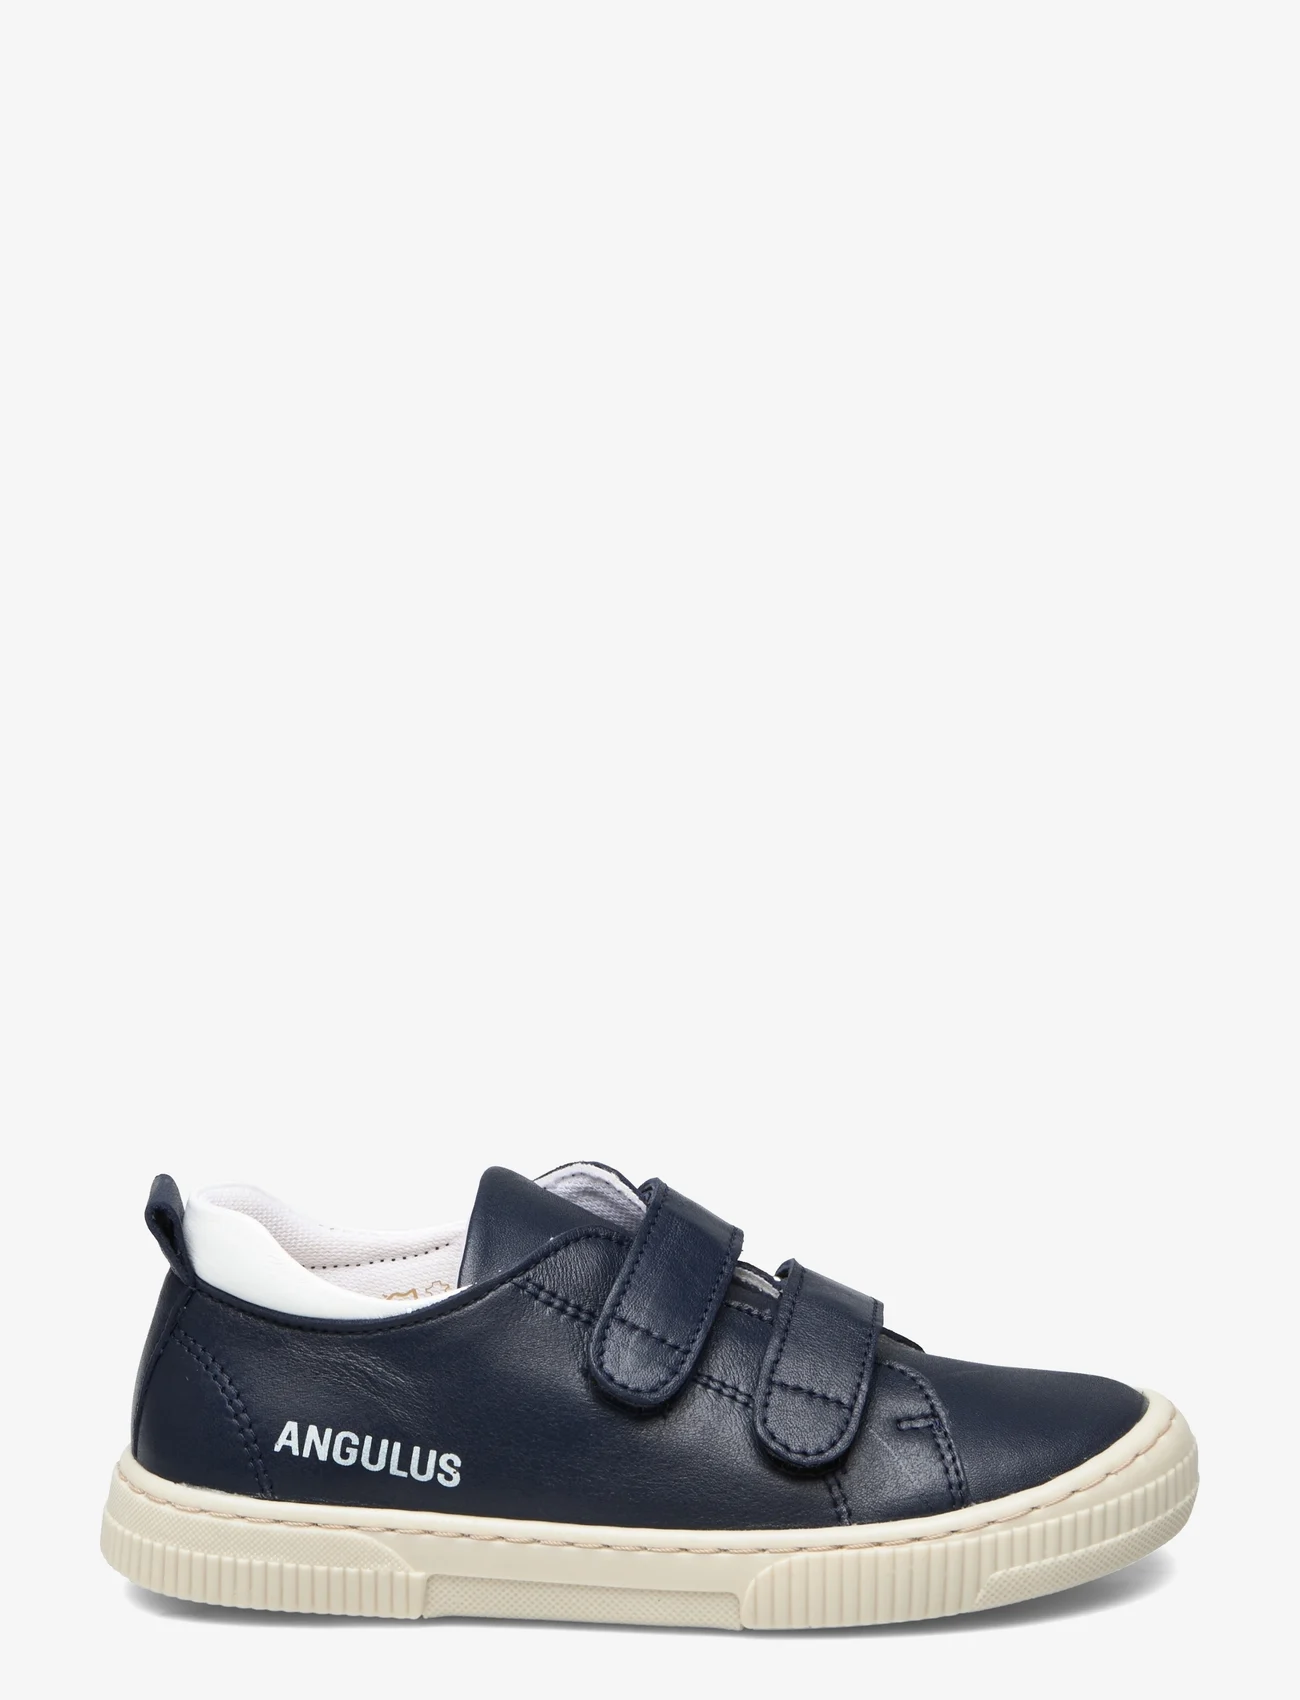 ANGULUS - Shoes - flat - with velcro - vasaras piedāvājumi - 2585/1521 navy/white - 1